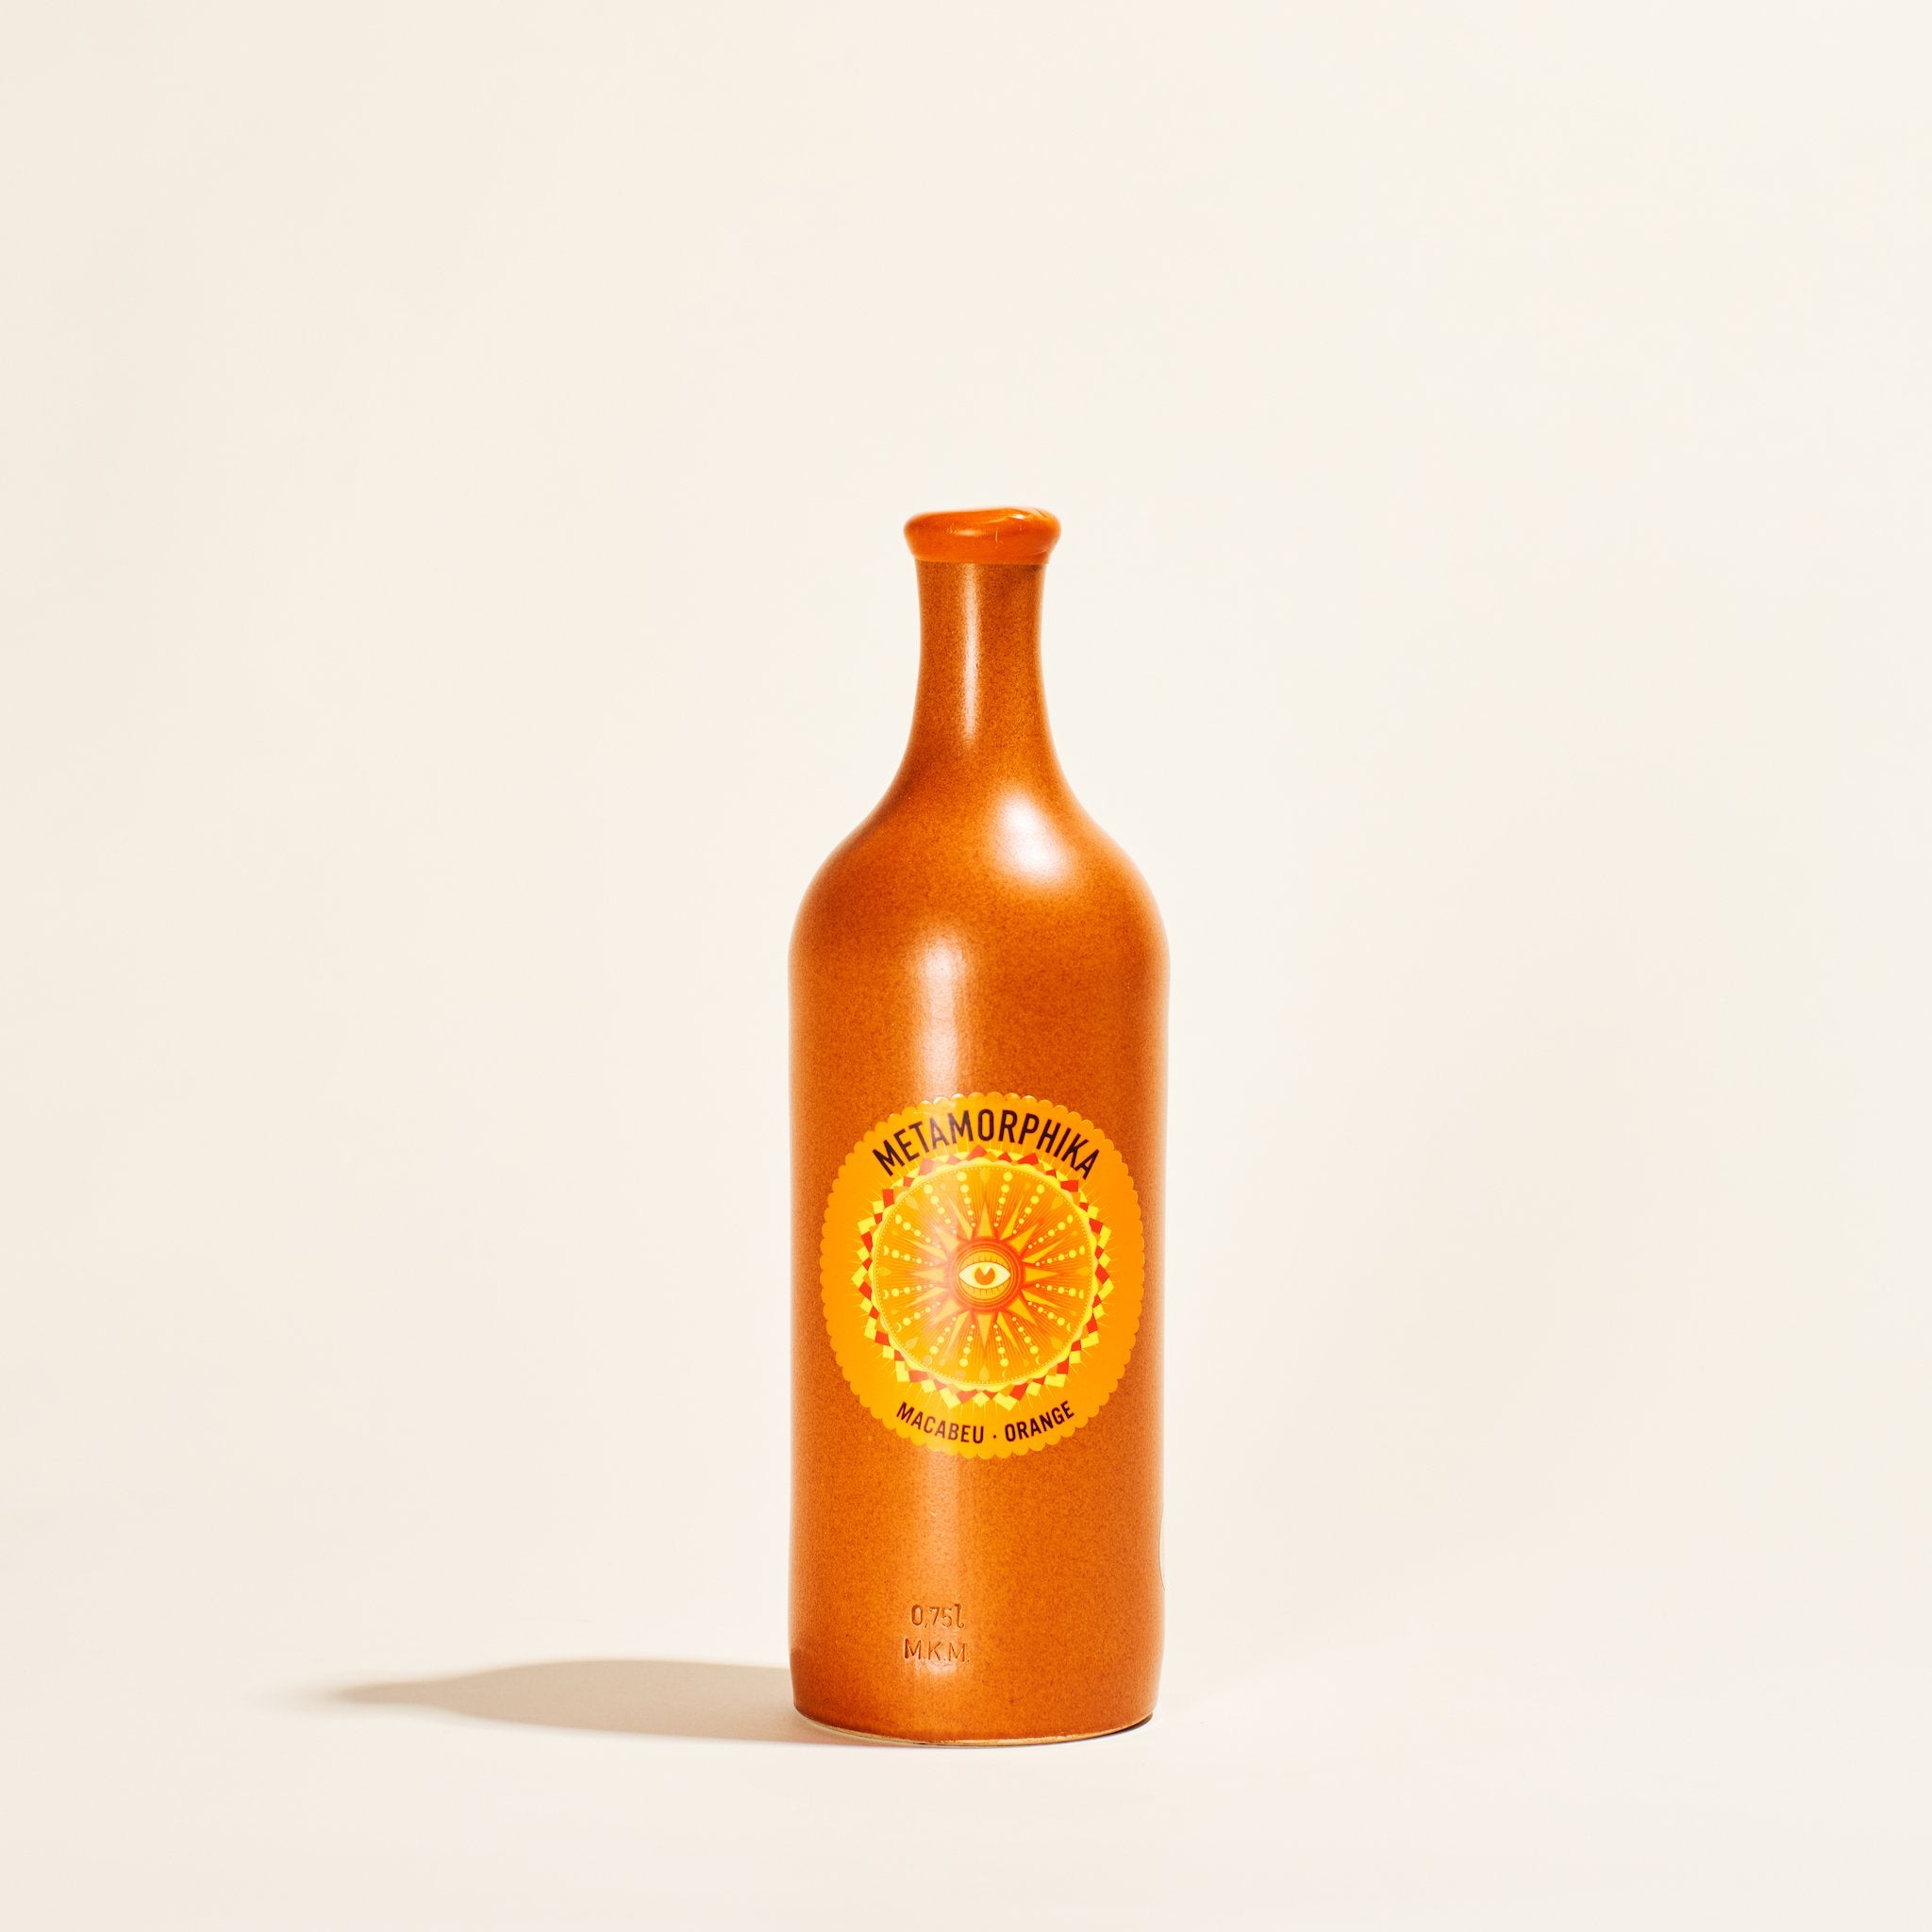 Costador Metamorphika | Orange Macabeu MYSA Wine Natural |